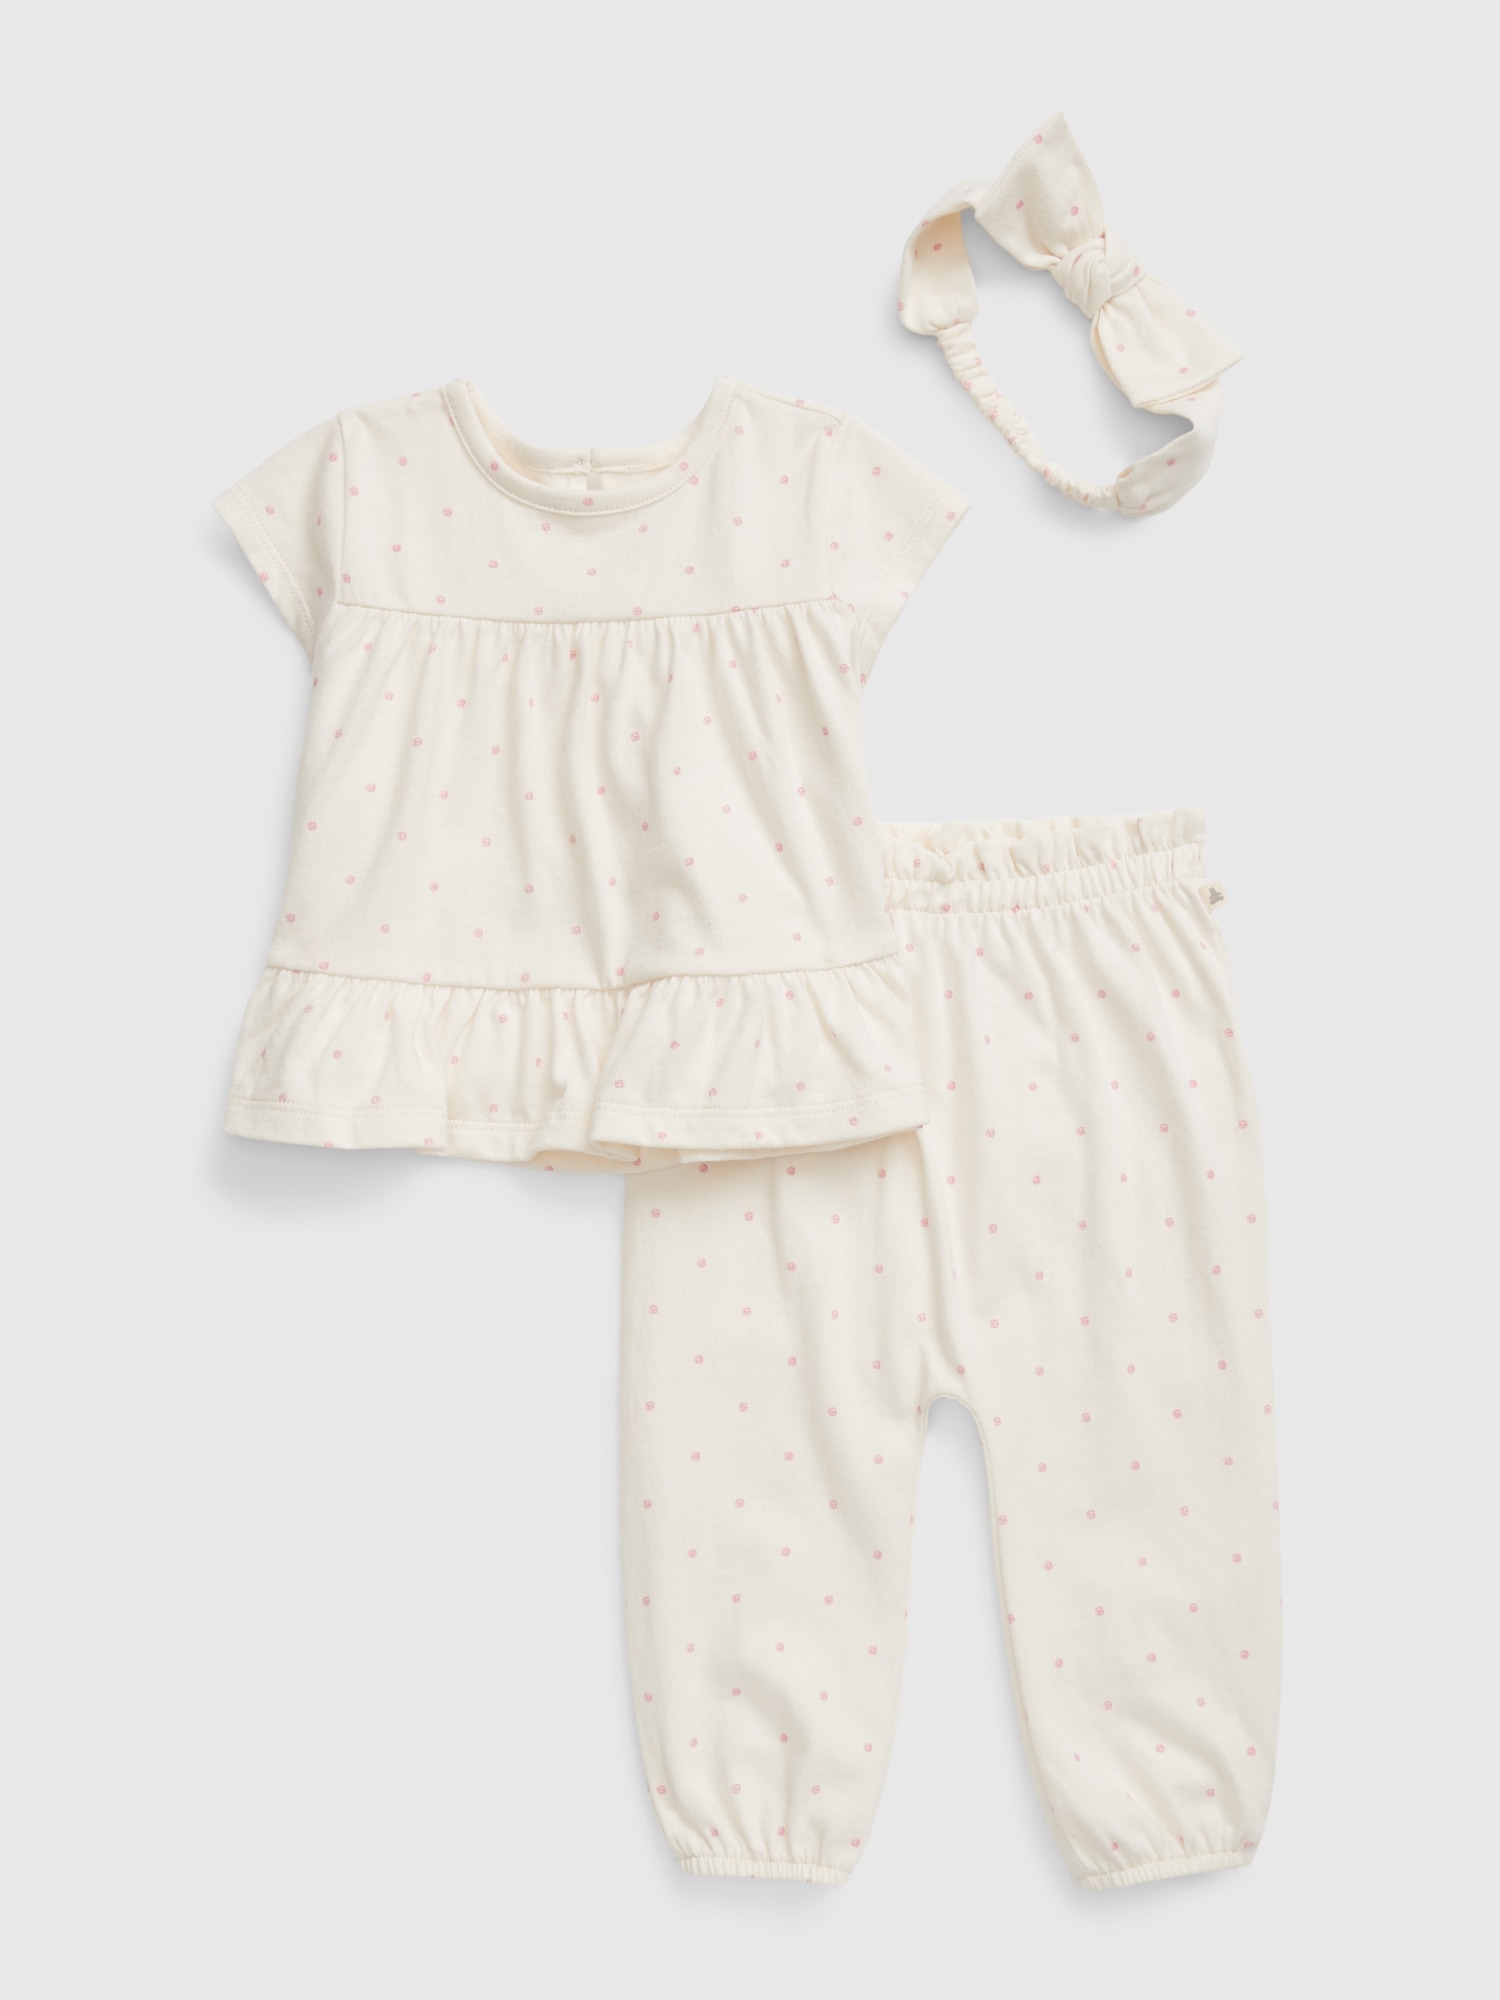 Gap Baby 100% Organic Cotton 3-Piece Outfit Set beige. 1